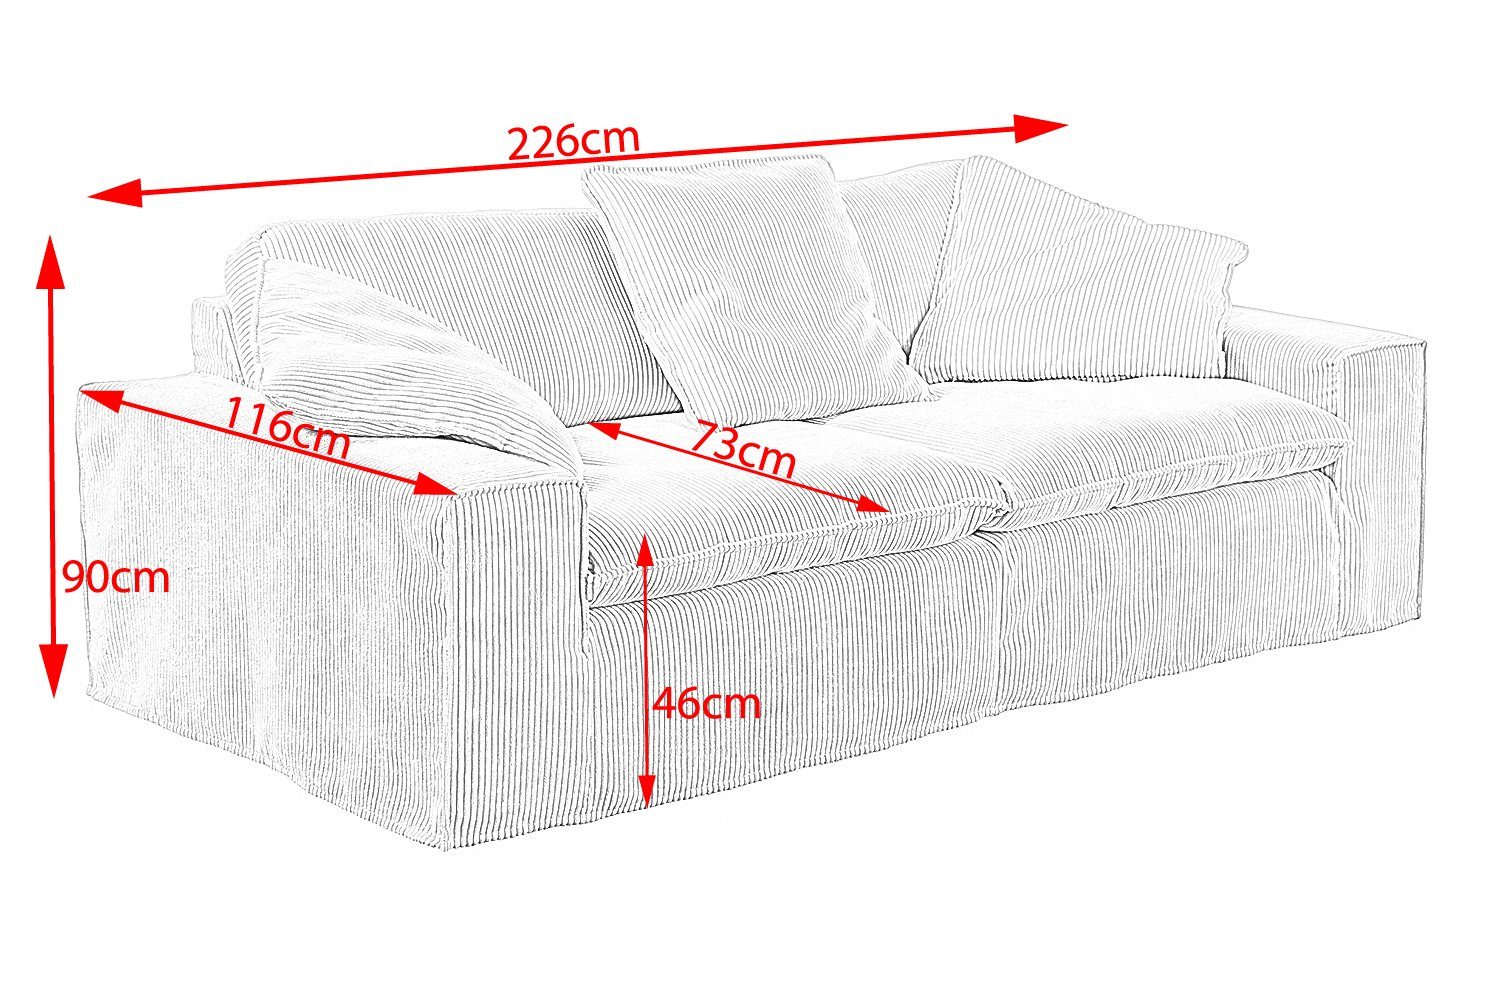 KAWOLA 3-Sitzer | Sofa dunkelgrau Cord Farben und Bezug versch. abziehbar, dunkelgrau NETTA, versch. Breiten